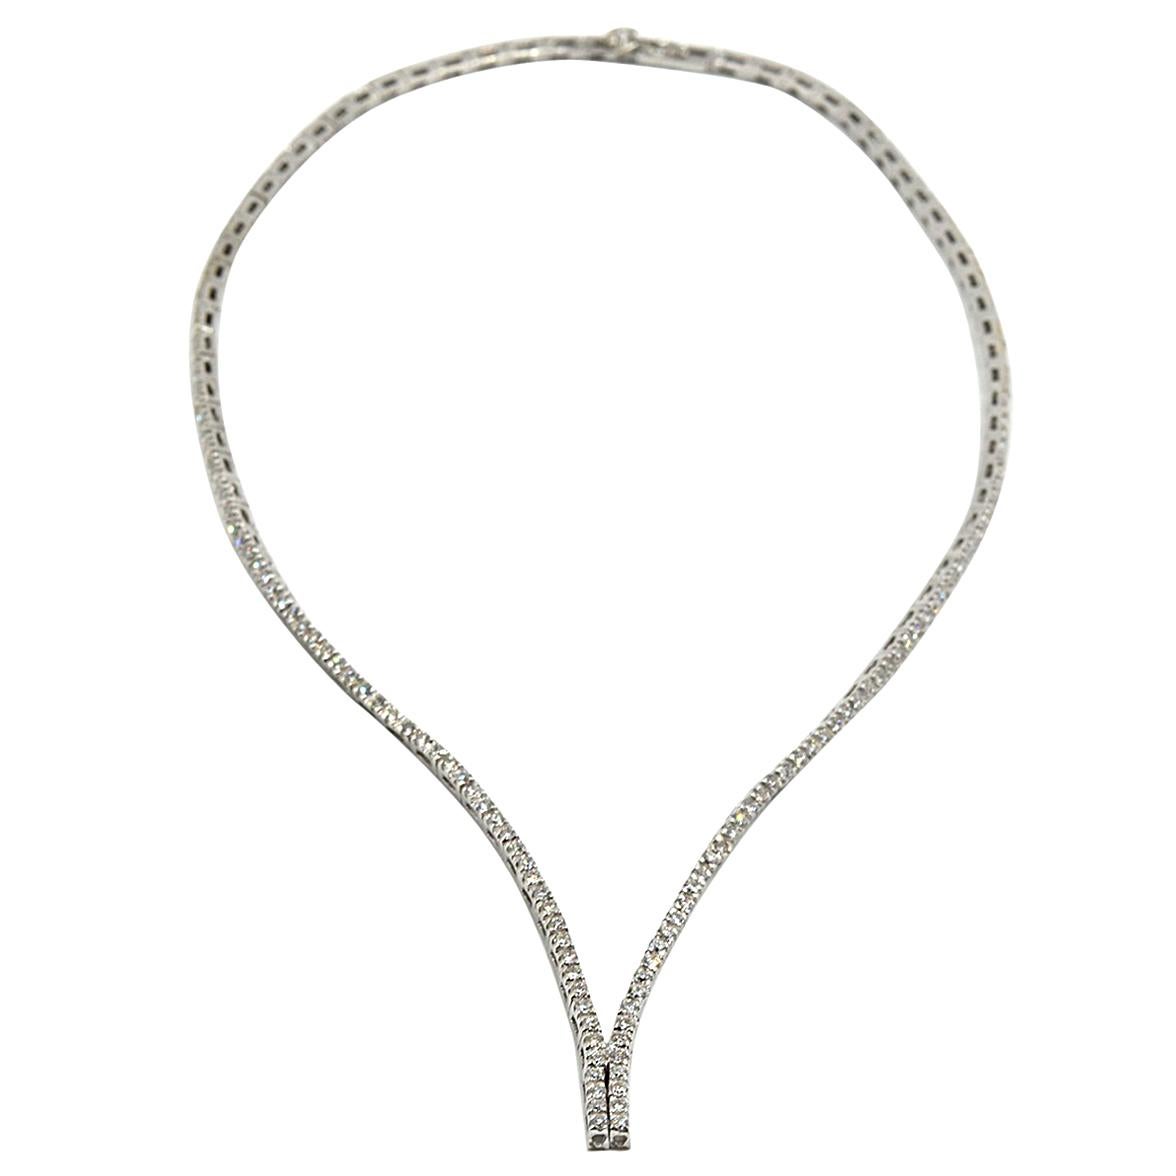 4.10 Carat Diamond 18 Karat White Gold “Y” Necklace